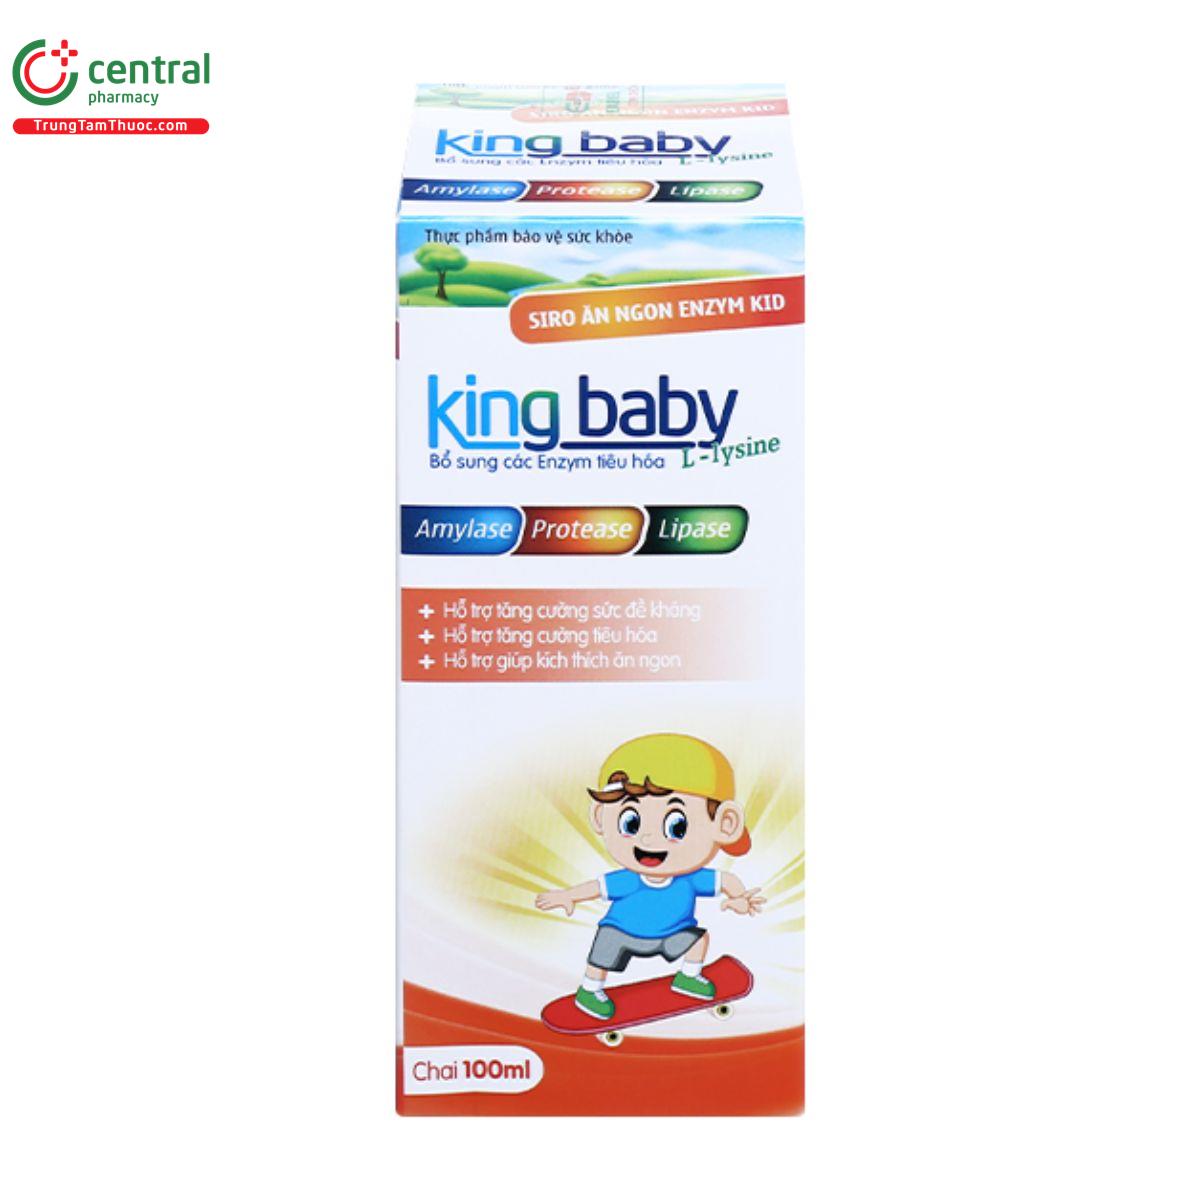 enzym kid king baby 10 B0010